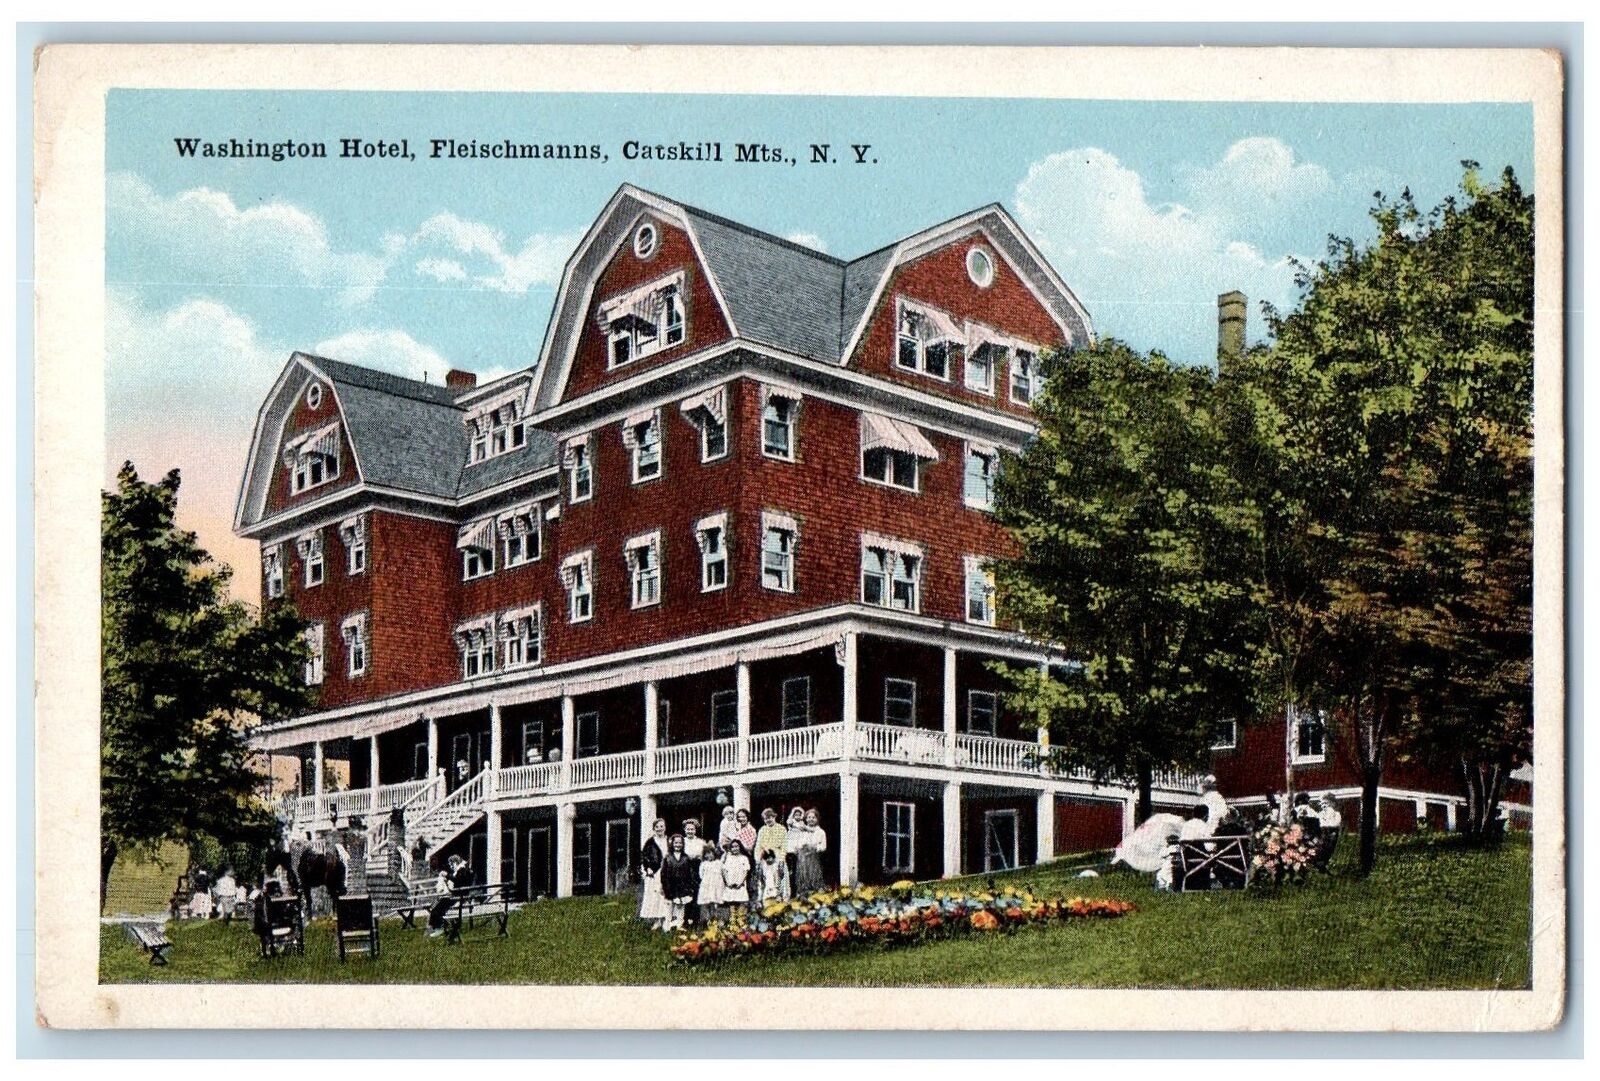 c1920s Washington Hotel Fleischmanns Catskill Mts. New York NY Posted Postcard